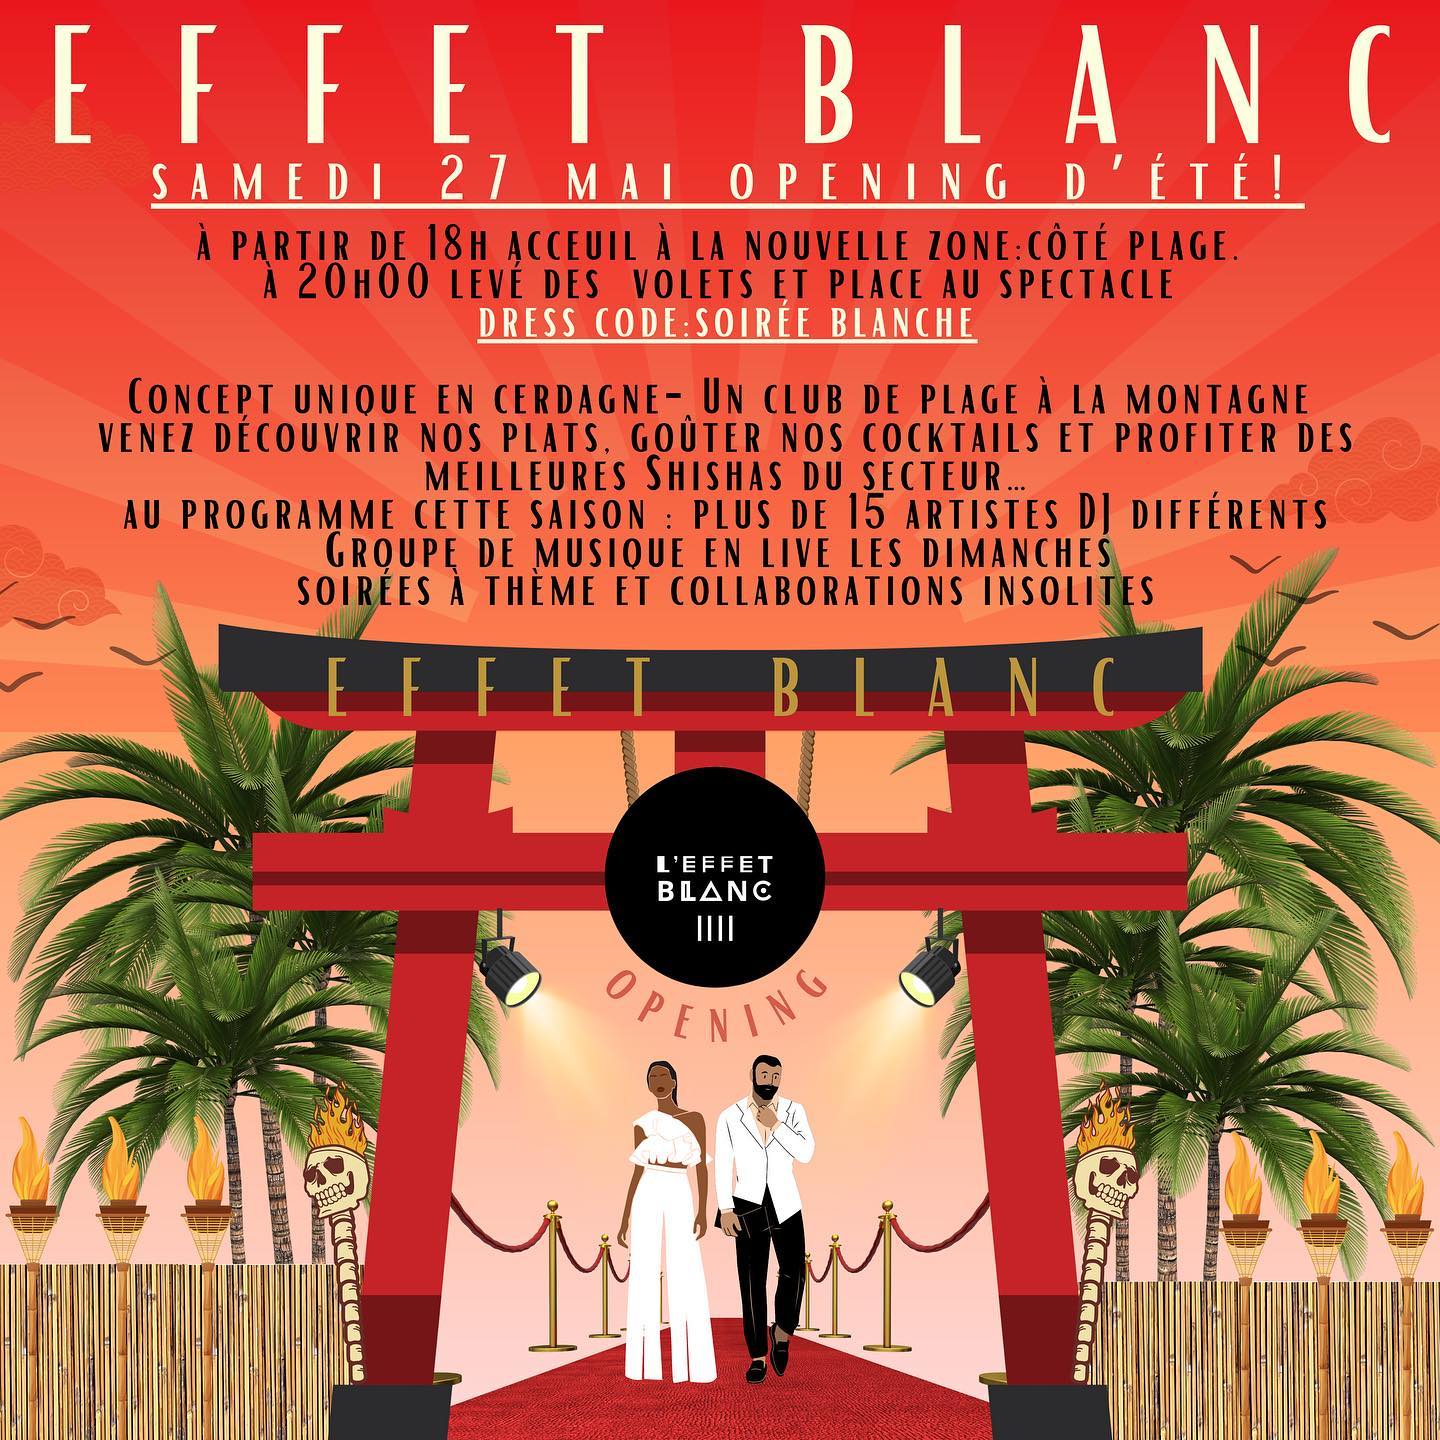 27 mai - EFFET BLANC - SAILLA-L'EFFET BLANC